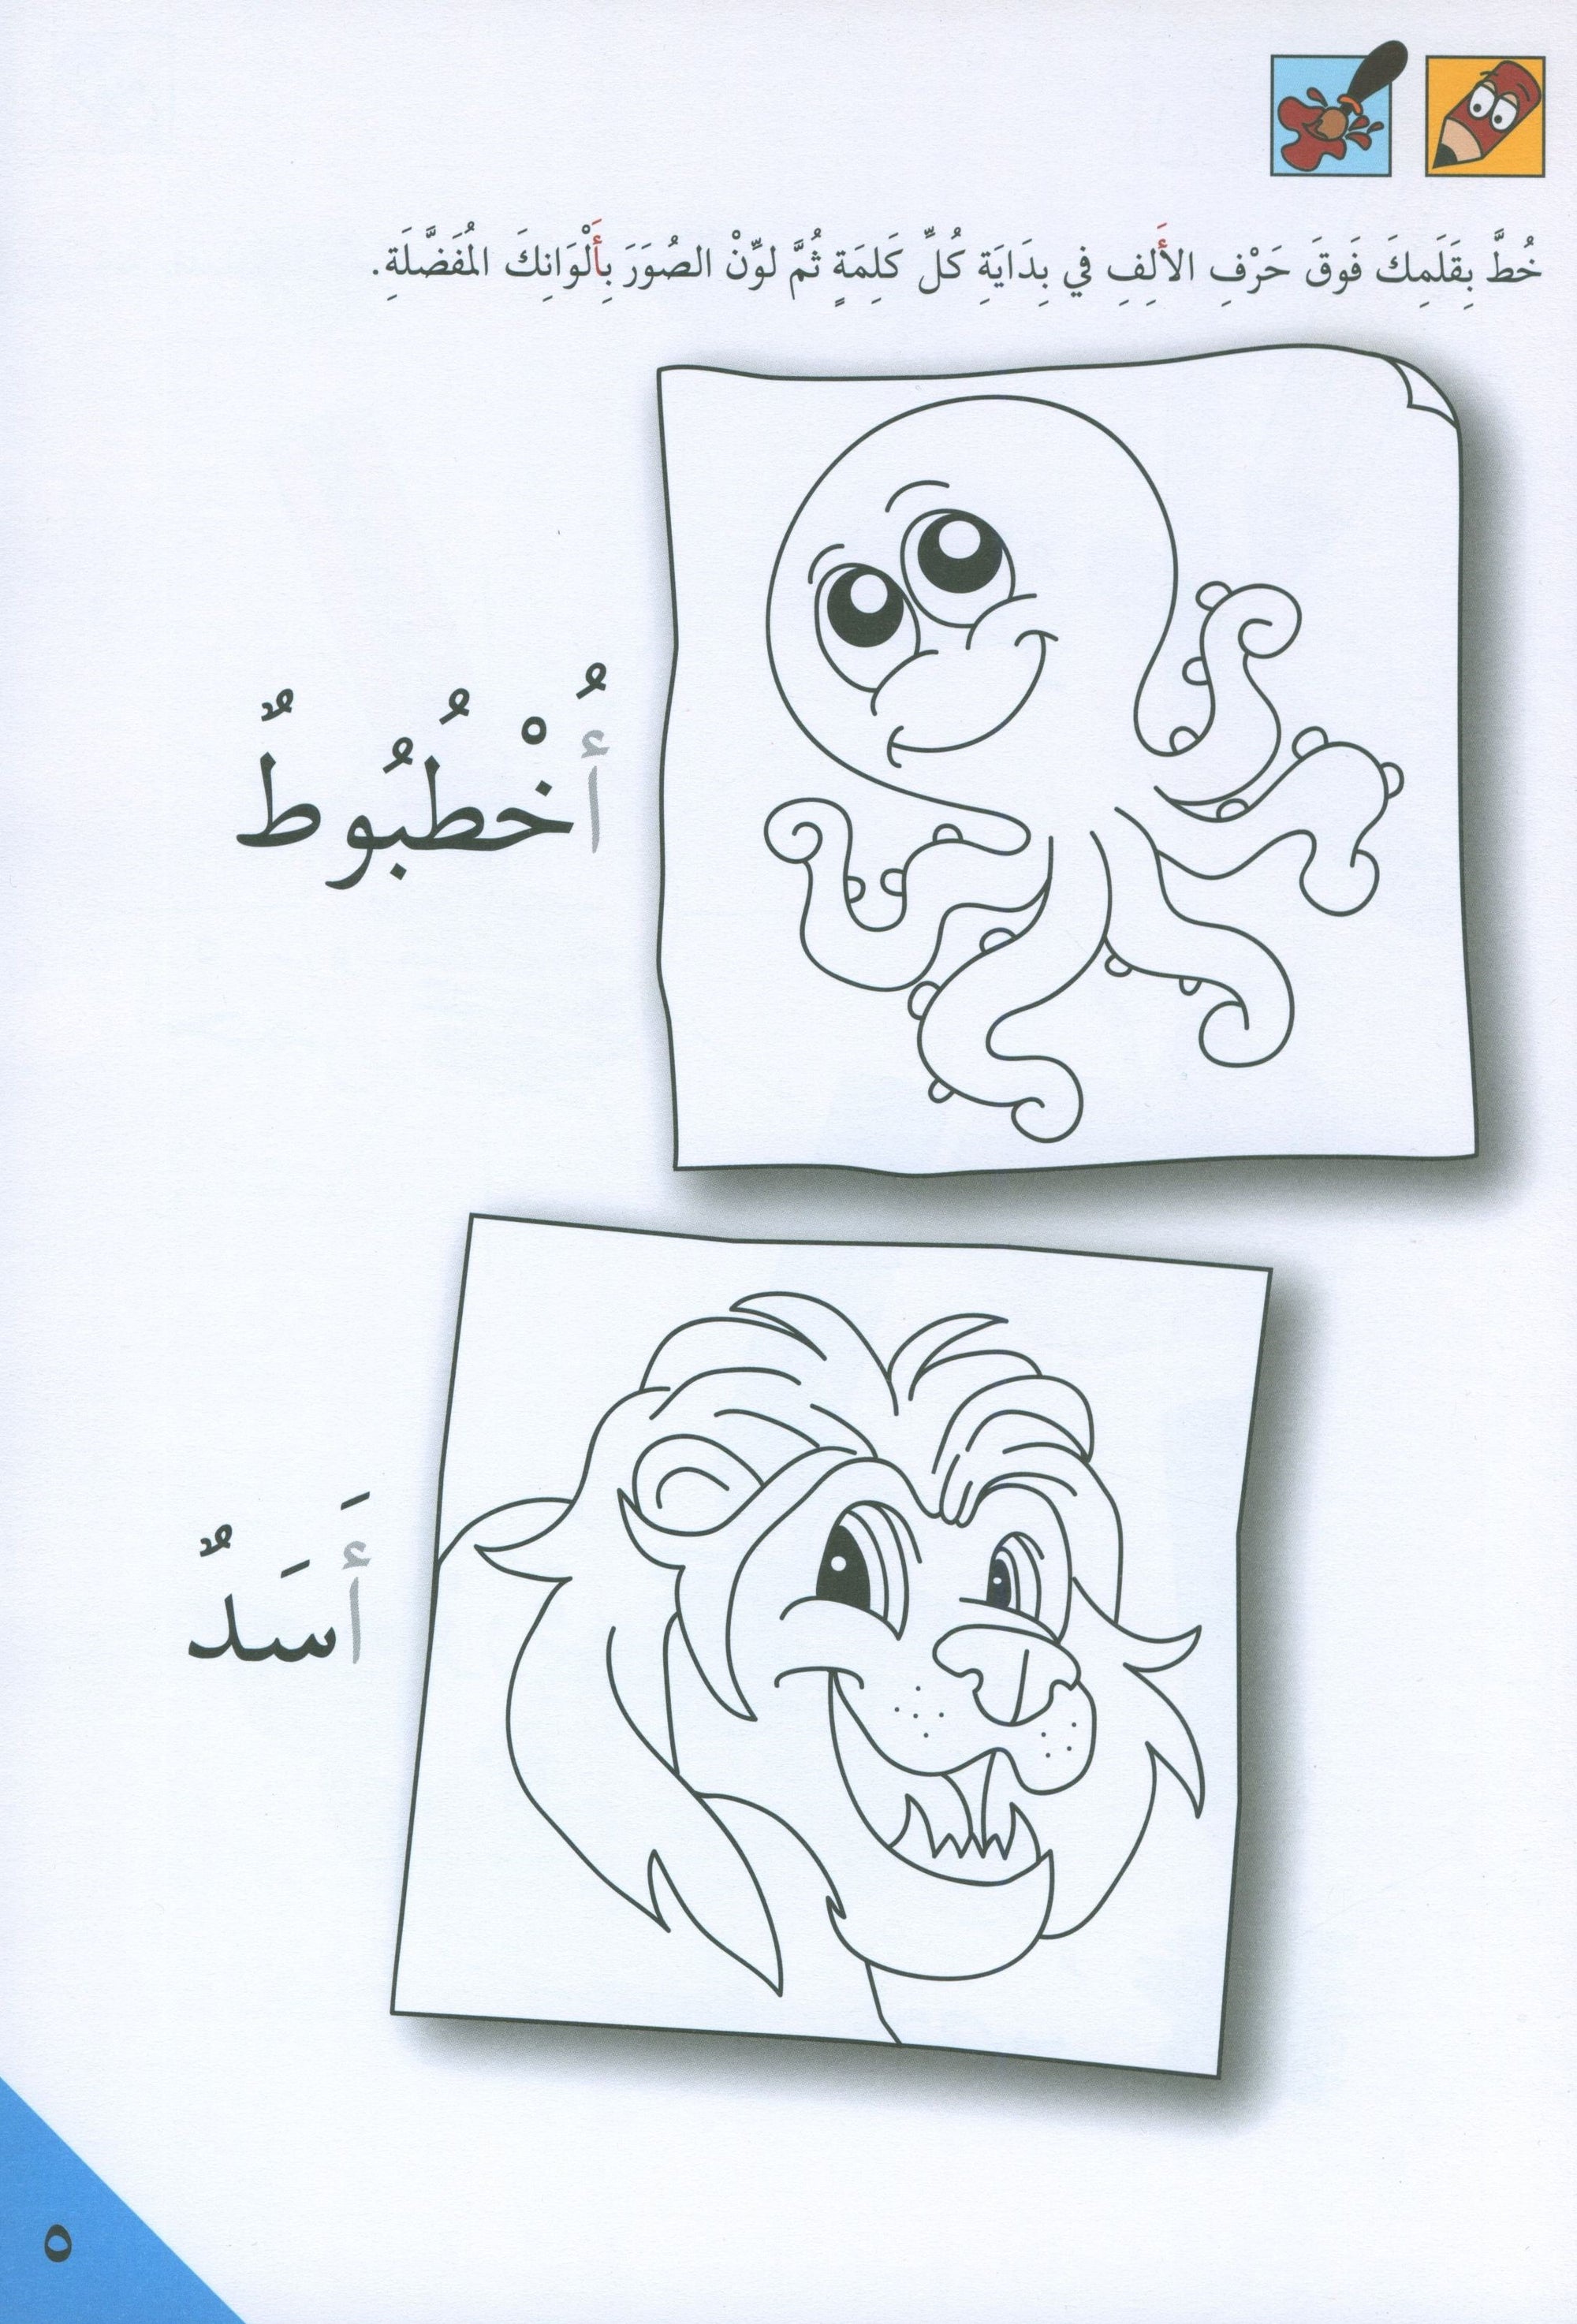 Preparing for School - My Arabic Letters Part 1 الاستعداد للمدرسة - أحرفي العربية